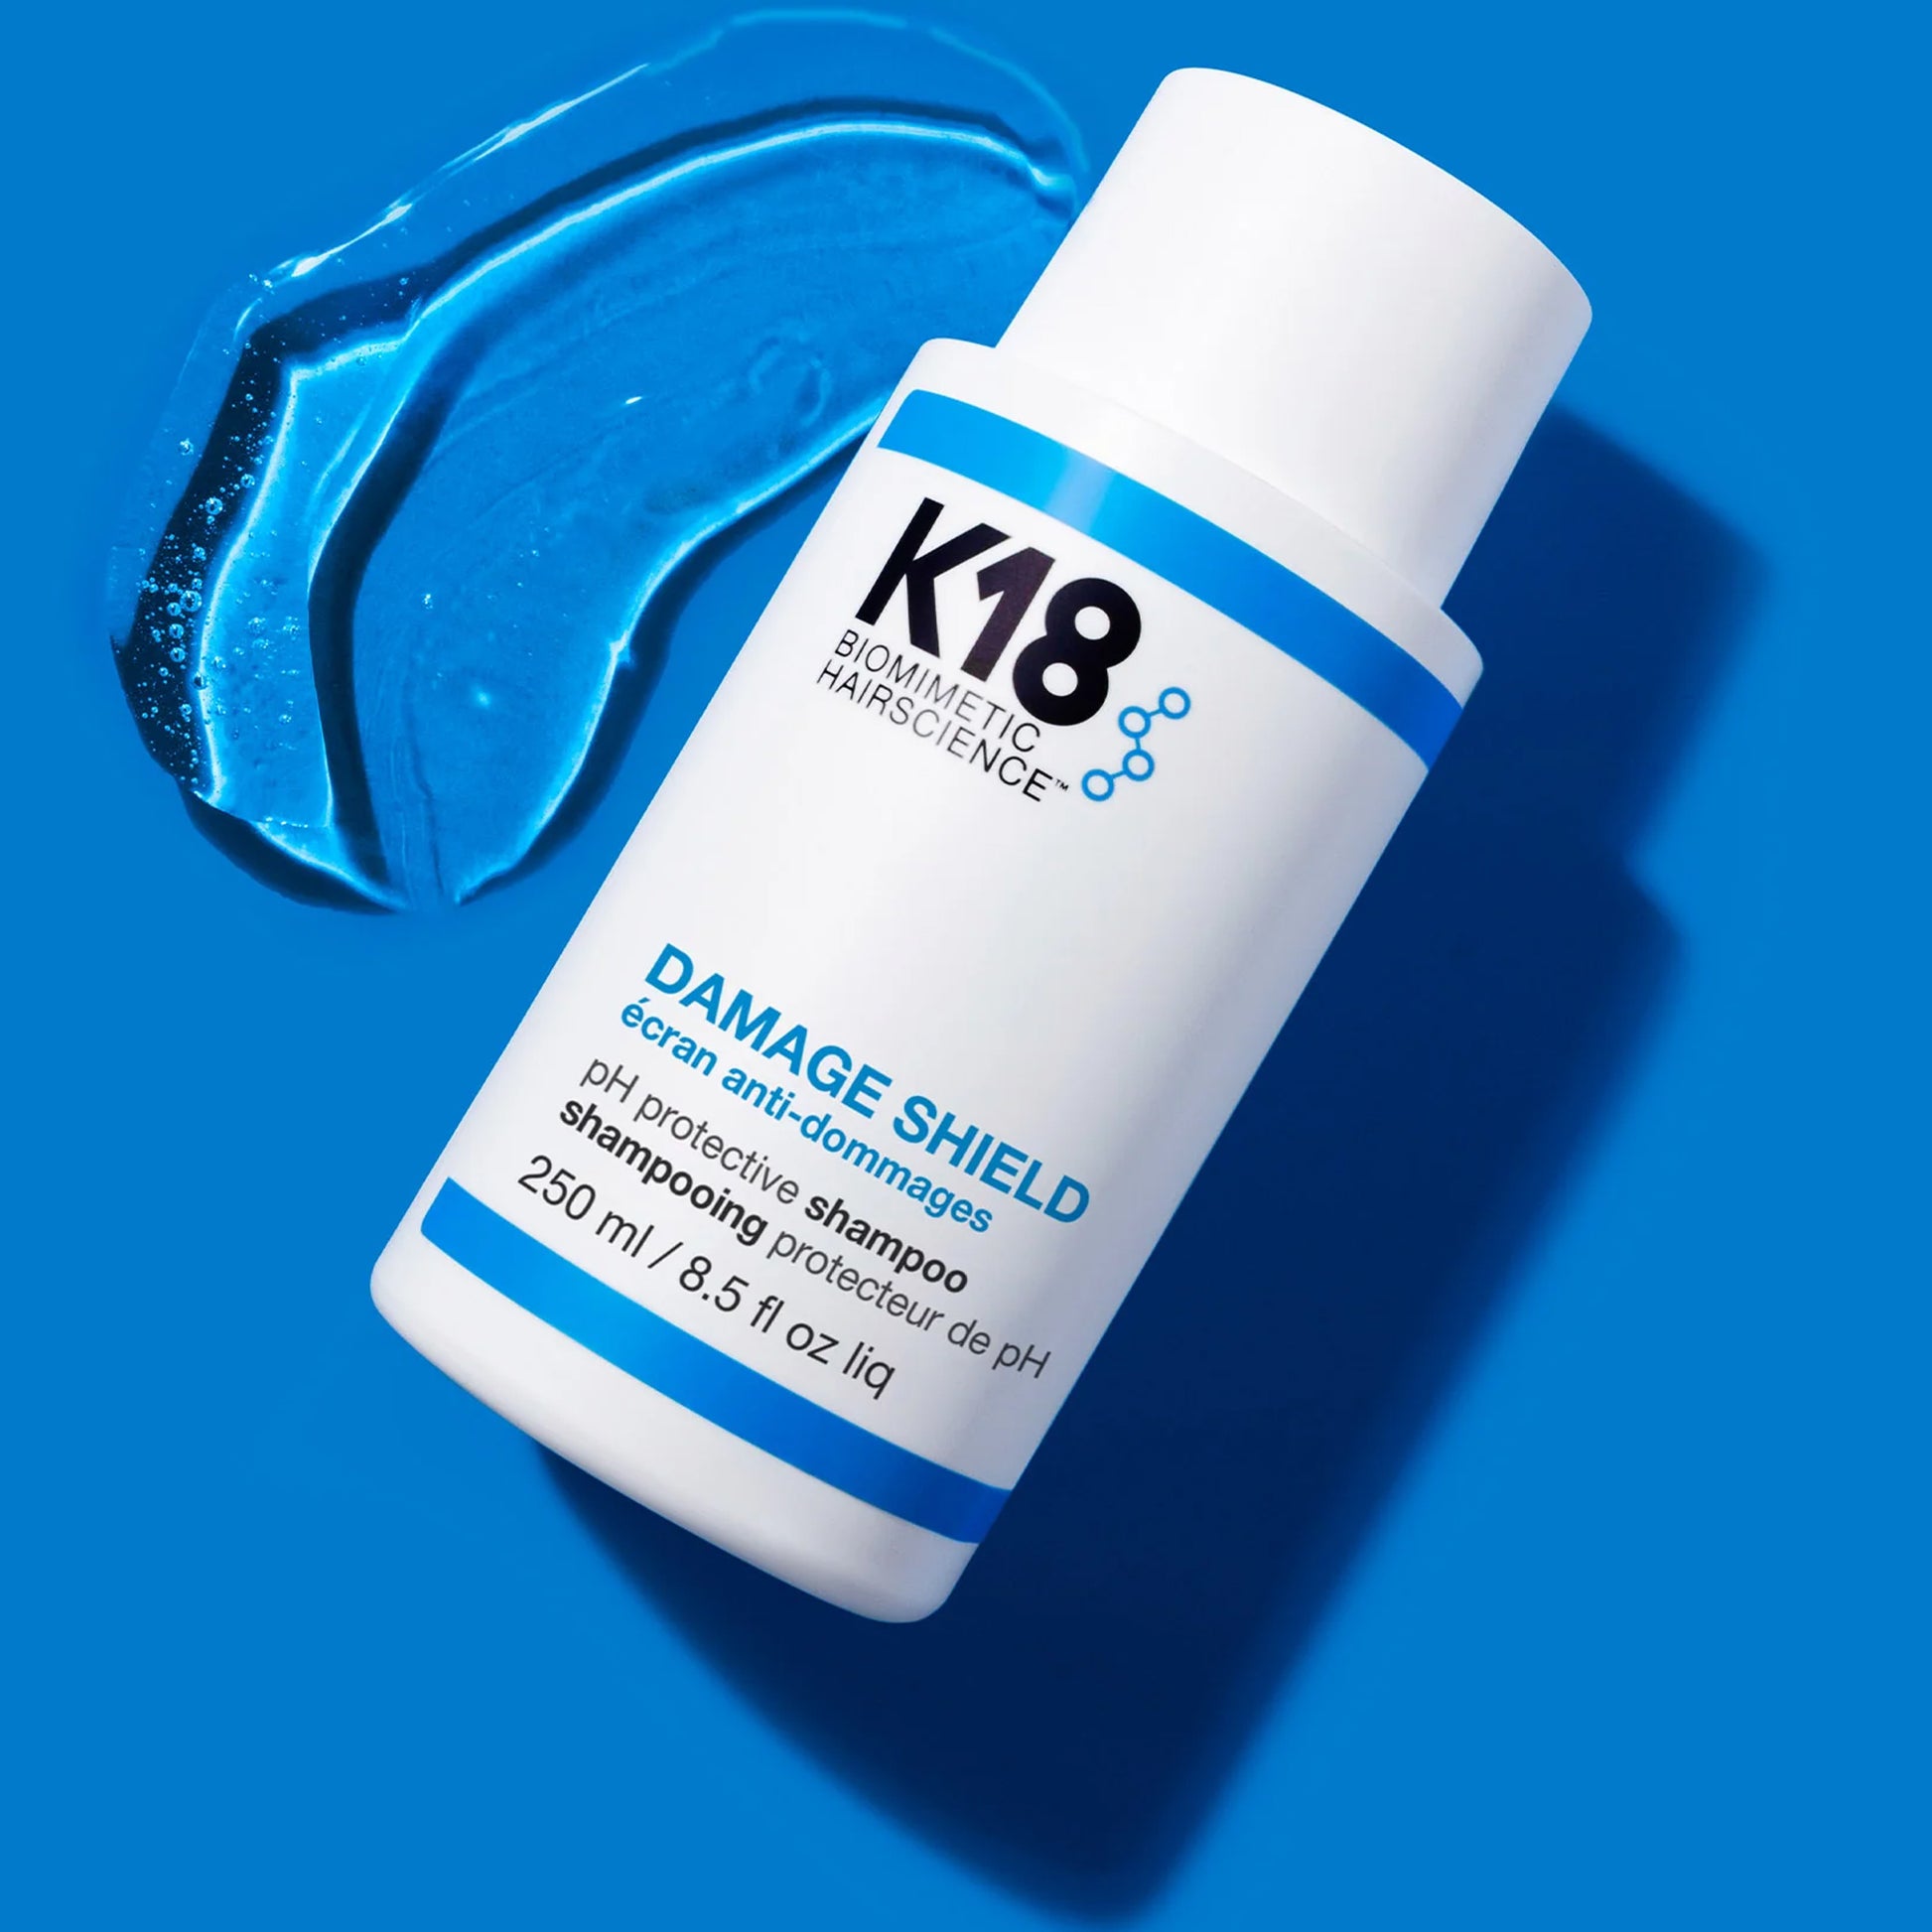 K18 Peptide Prep pH Maintenance Shampoo 250 mL